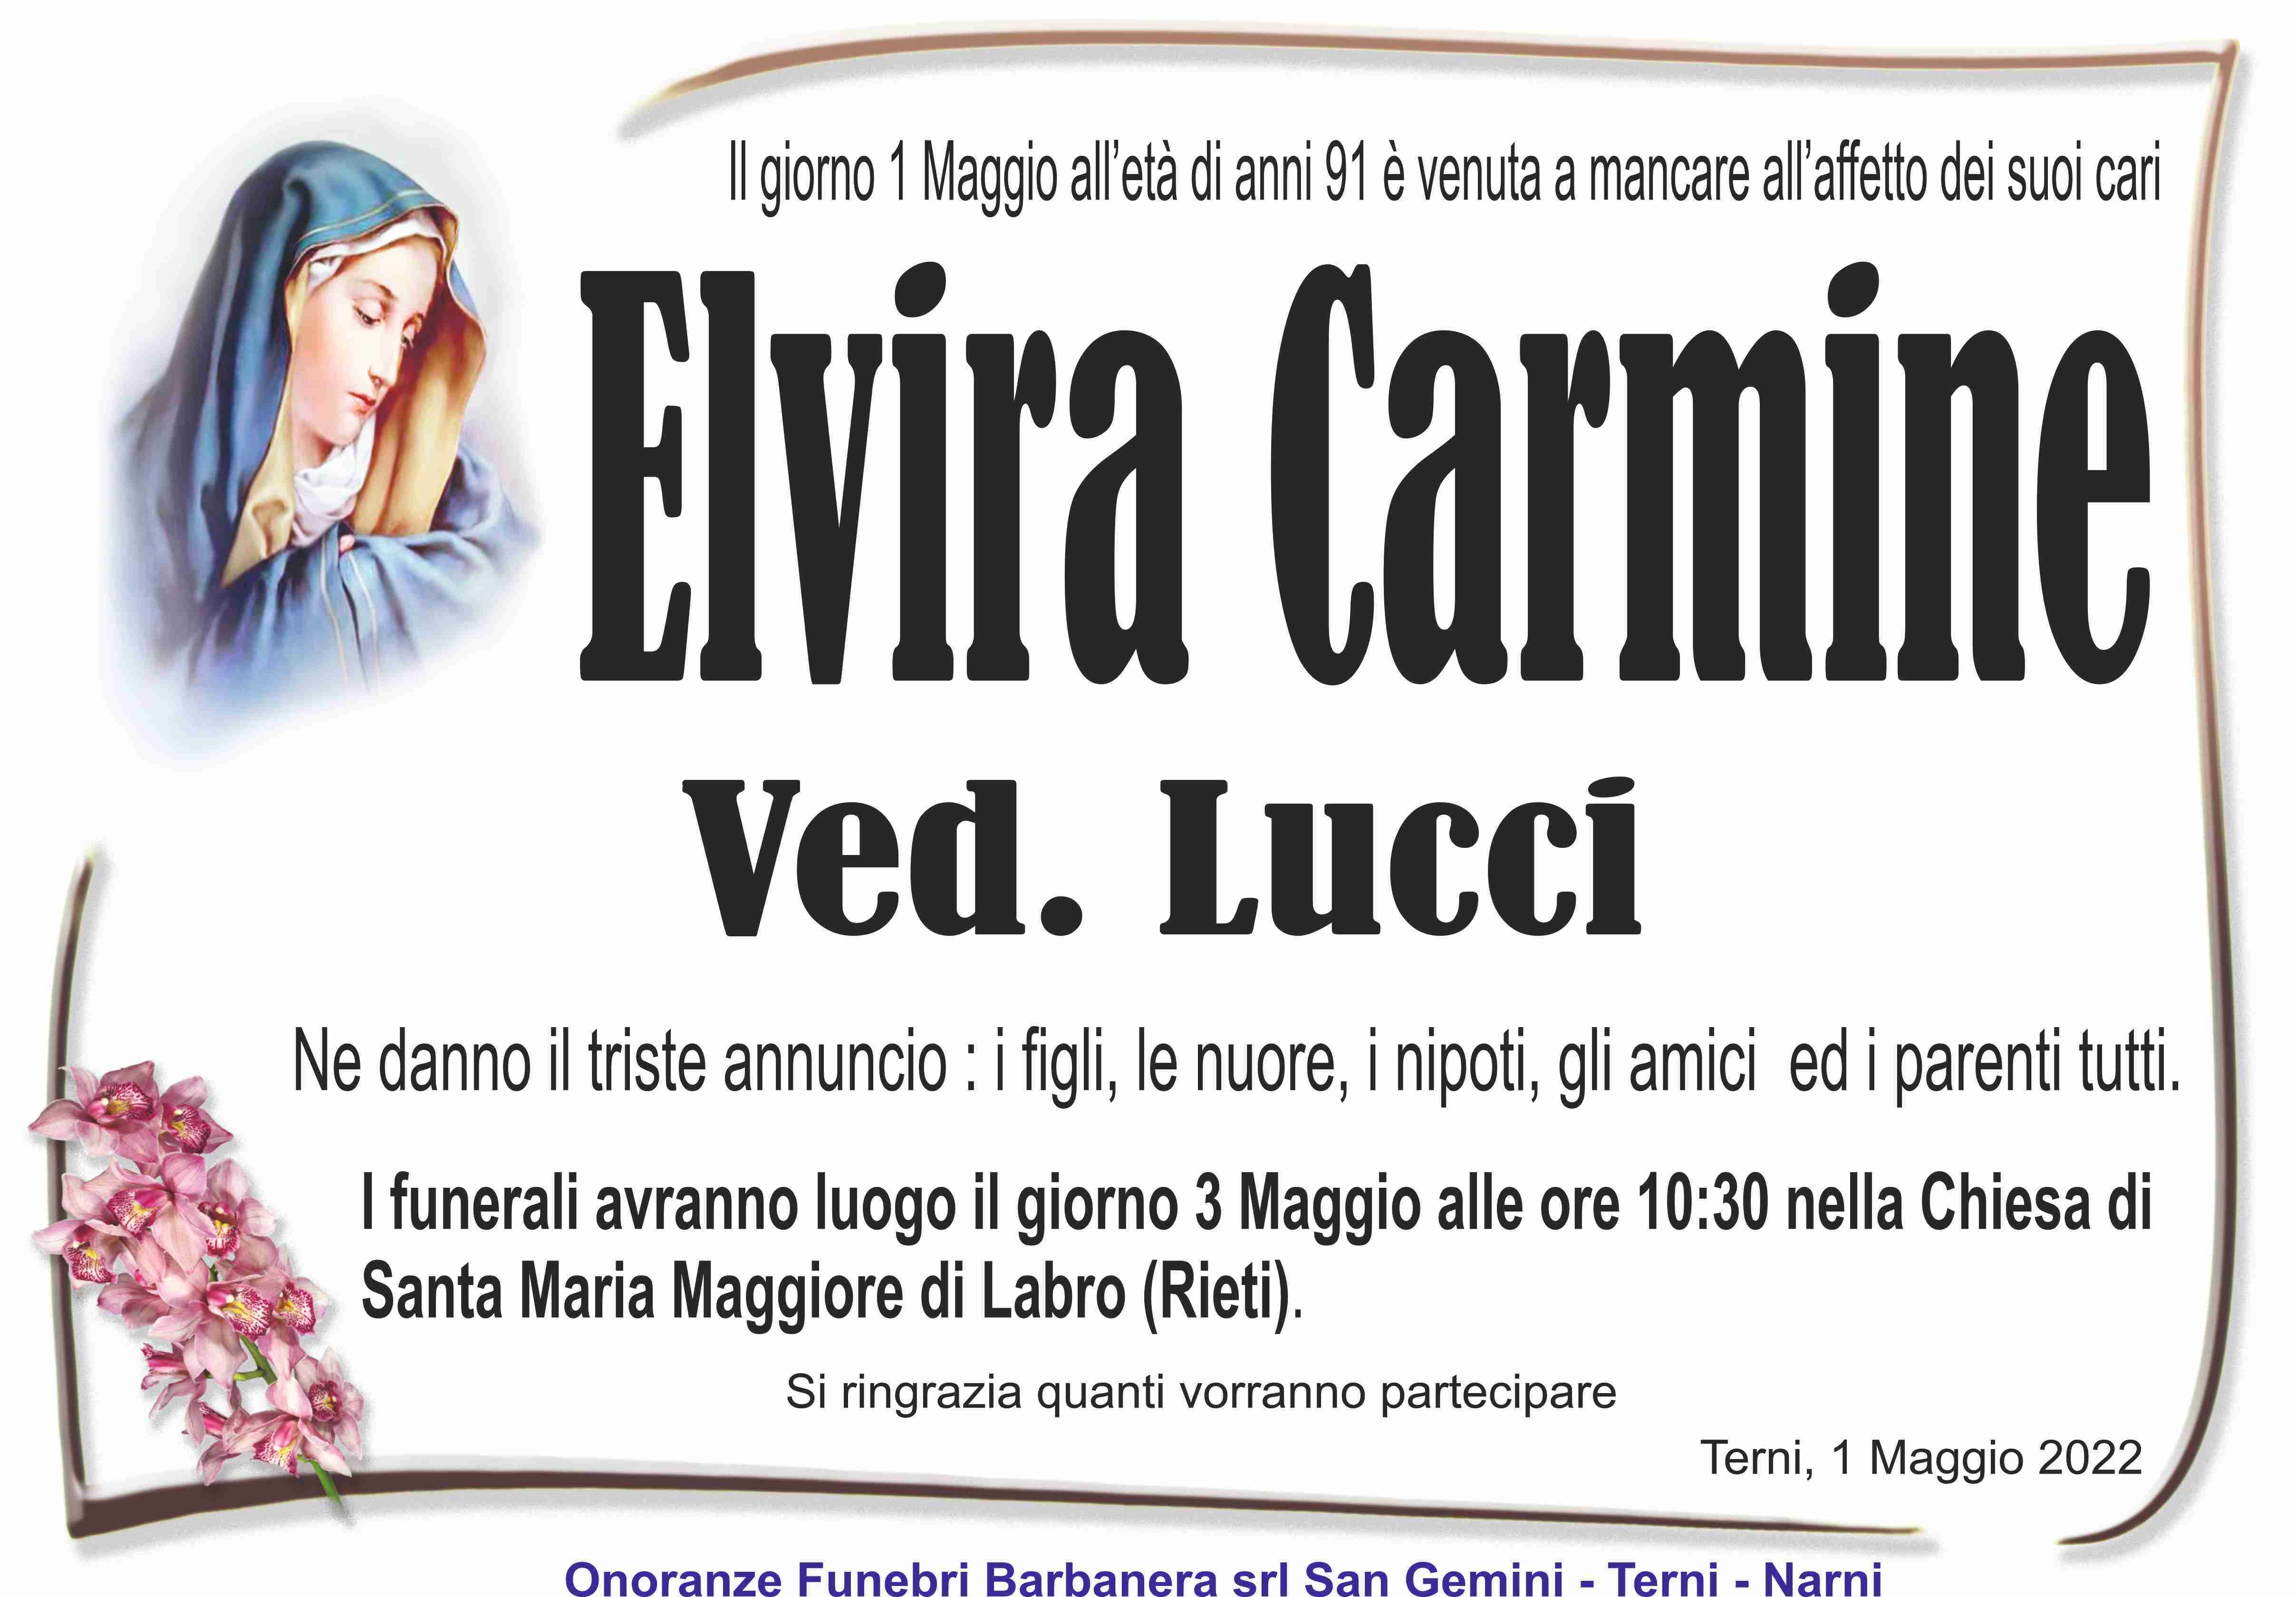 Elvira Carmine